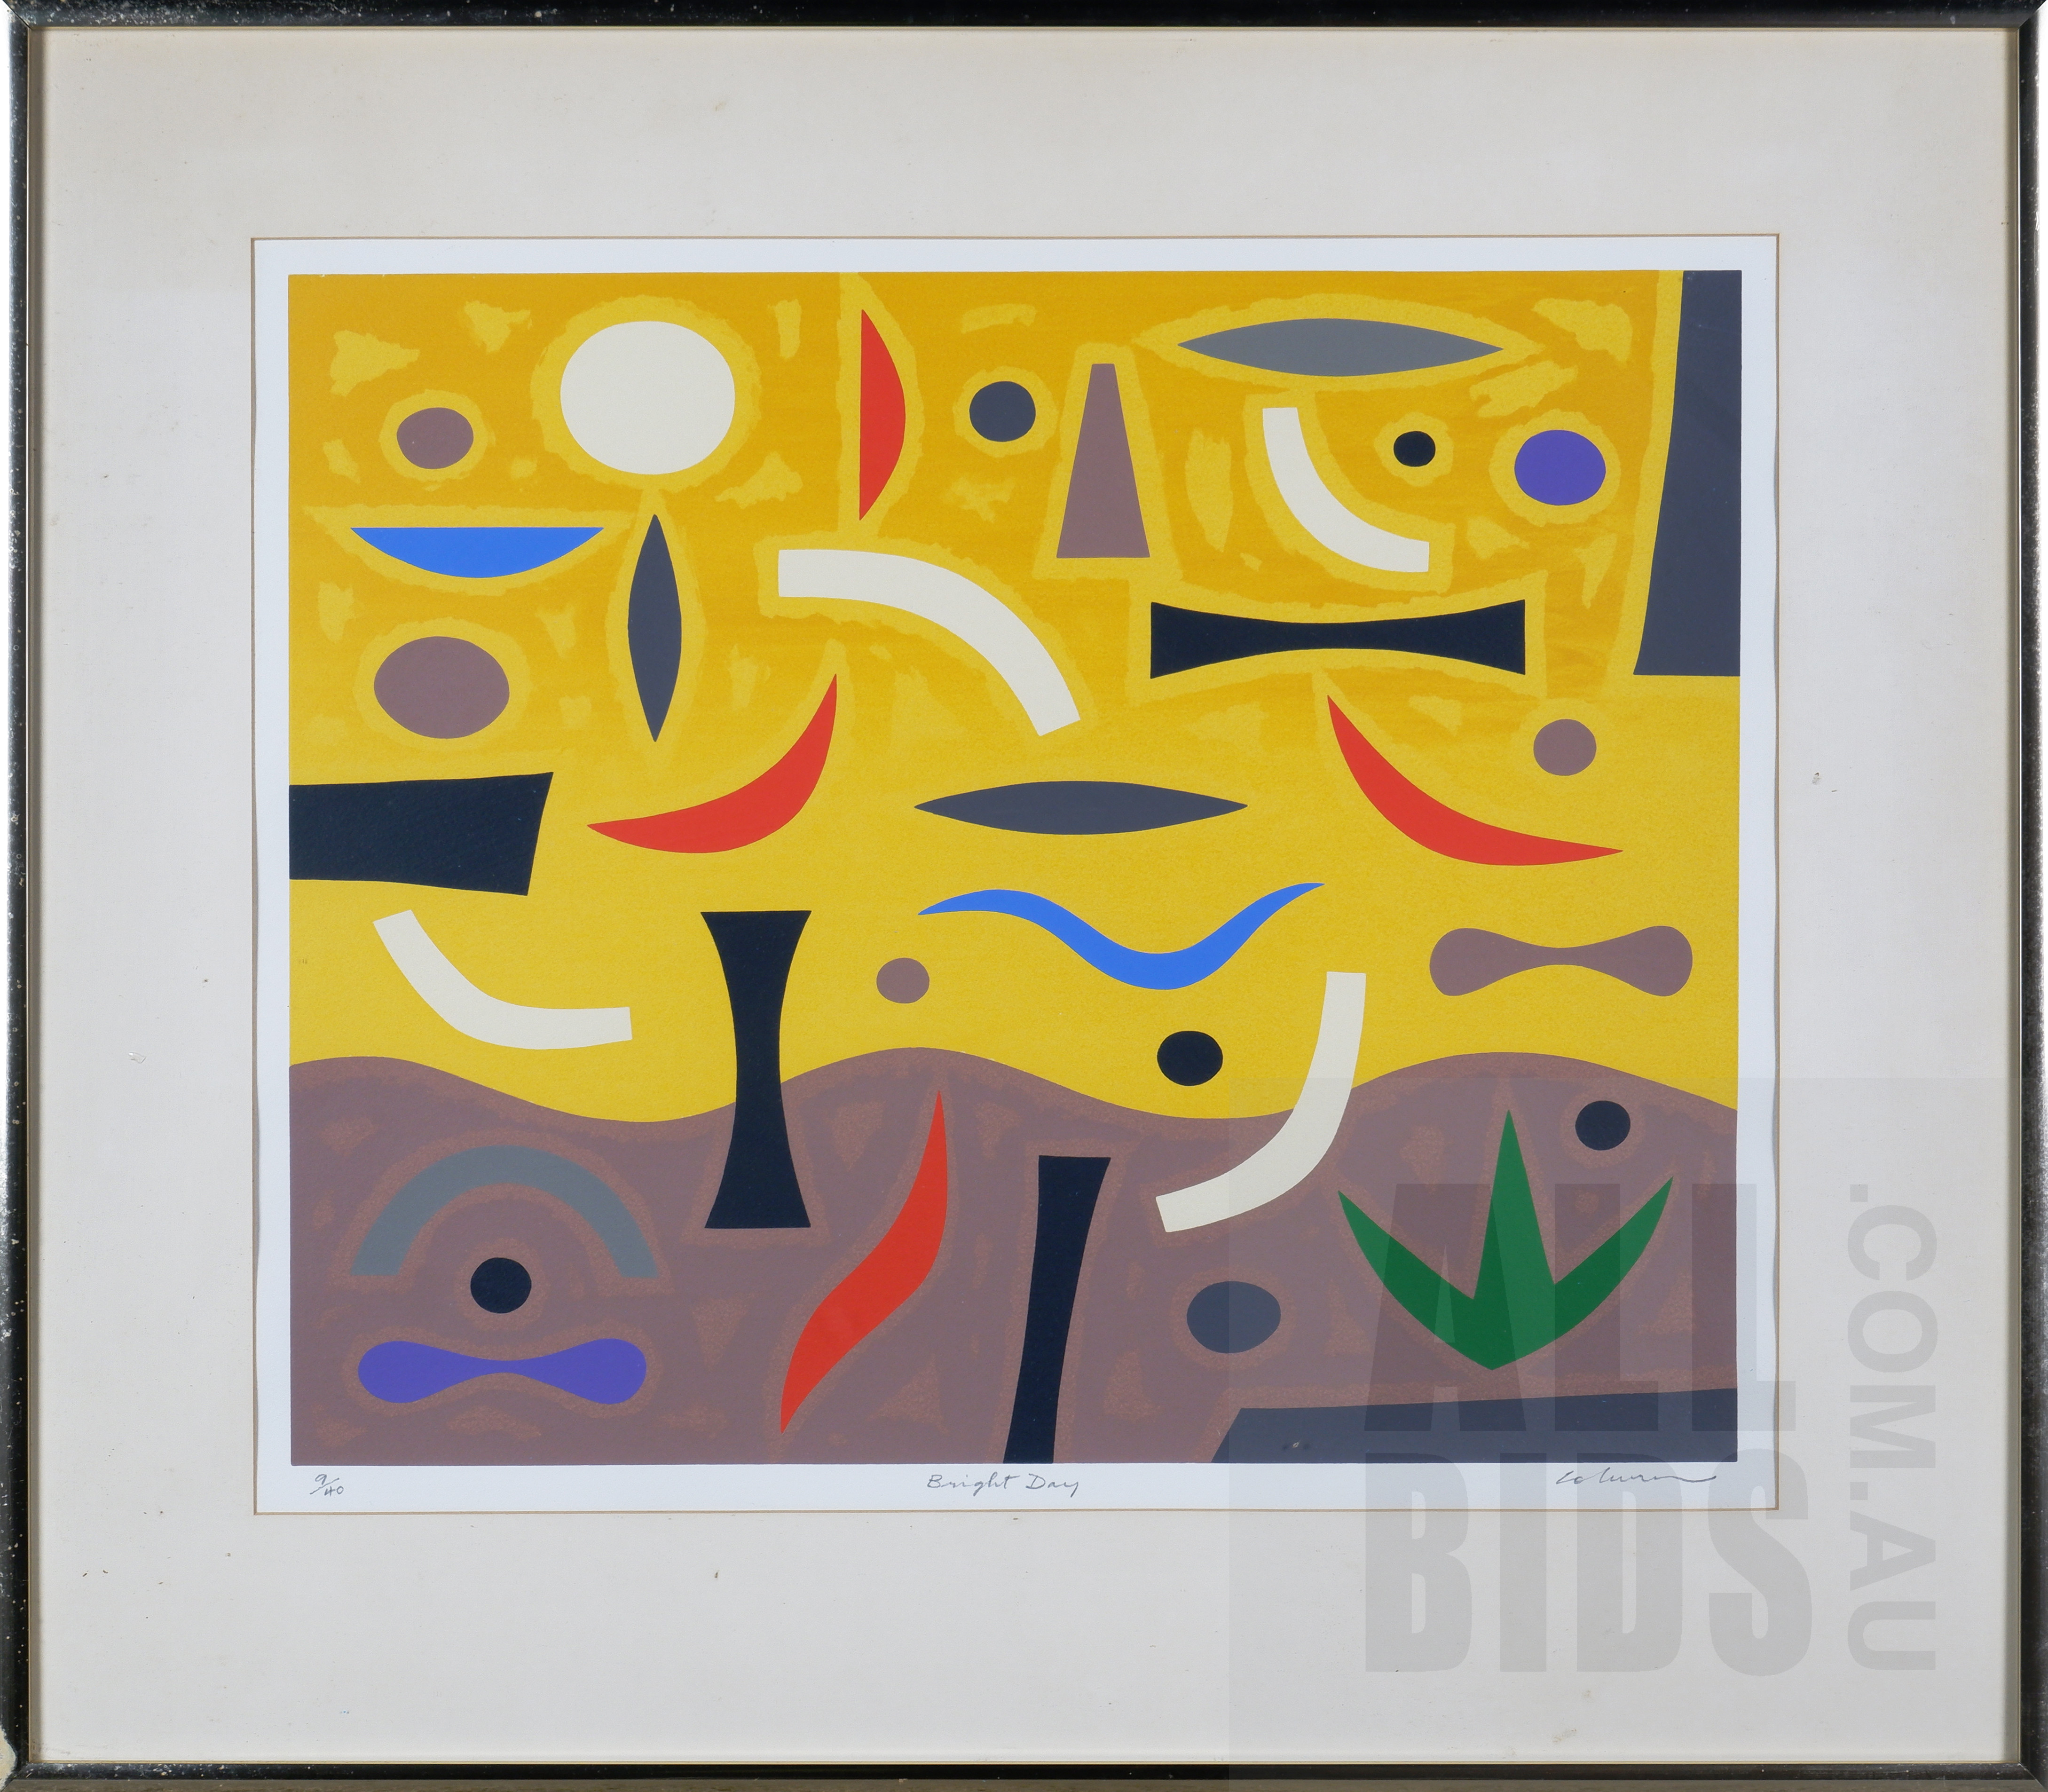 'John Coburn (1931-1986), Bright Day, Screenprint, 48 x 58 cm (image size)'